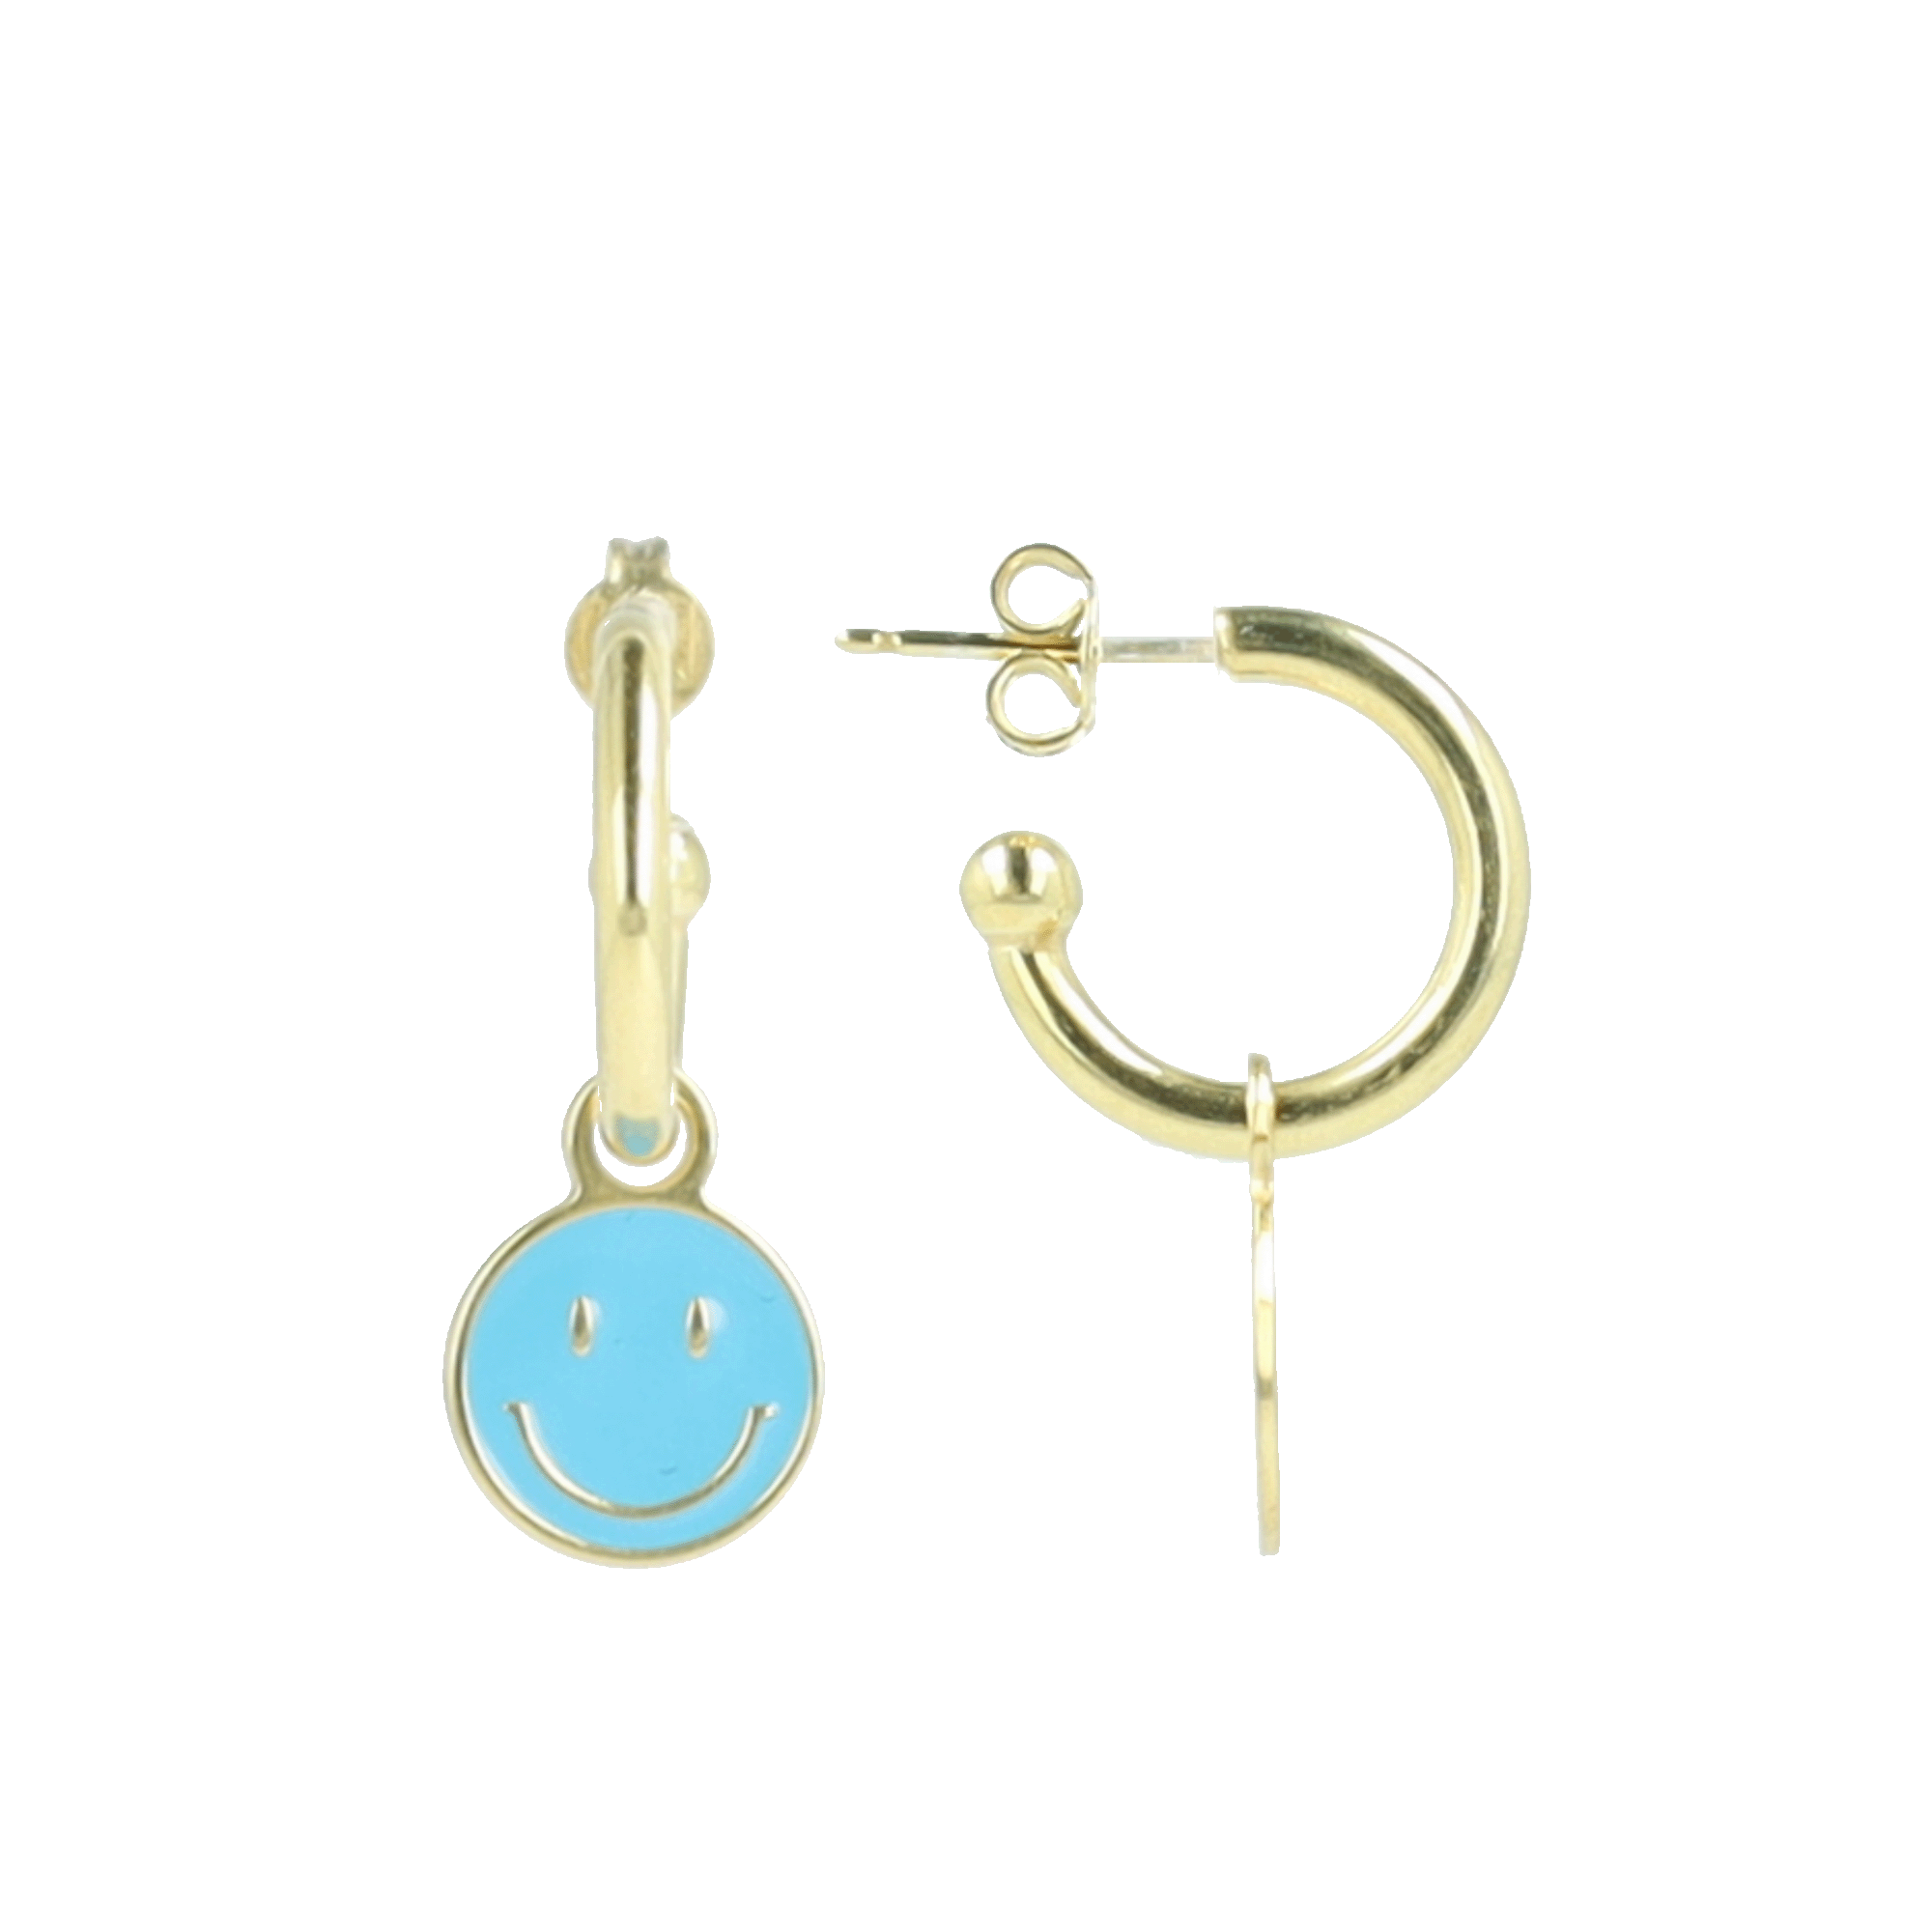 Smiley earrings enamel turquoiselott-theme.productDescriptionPage.SEO.byTheBrand